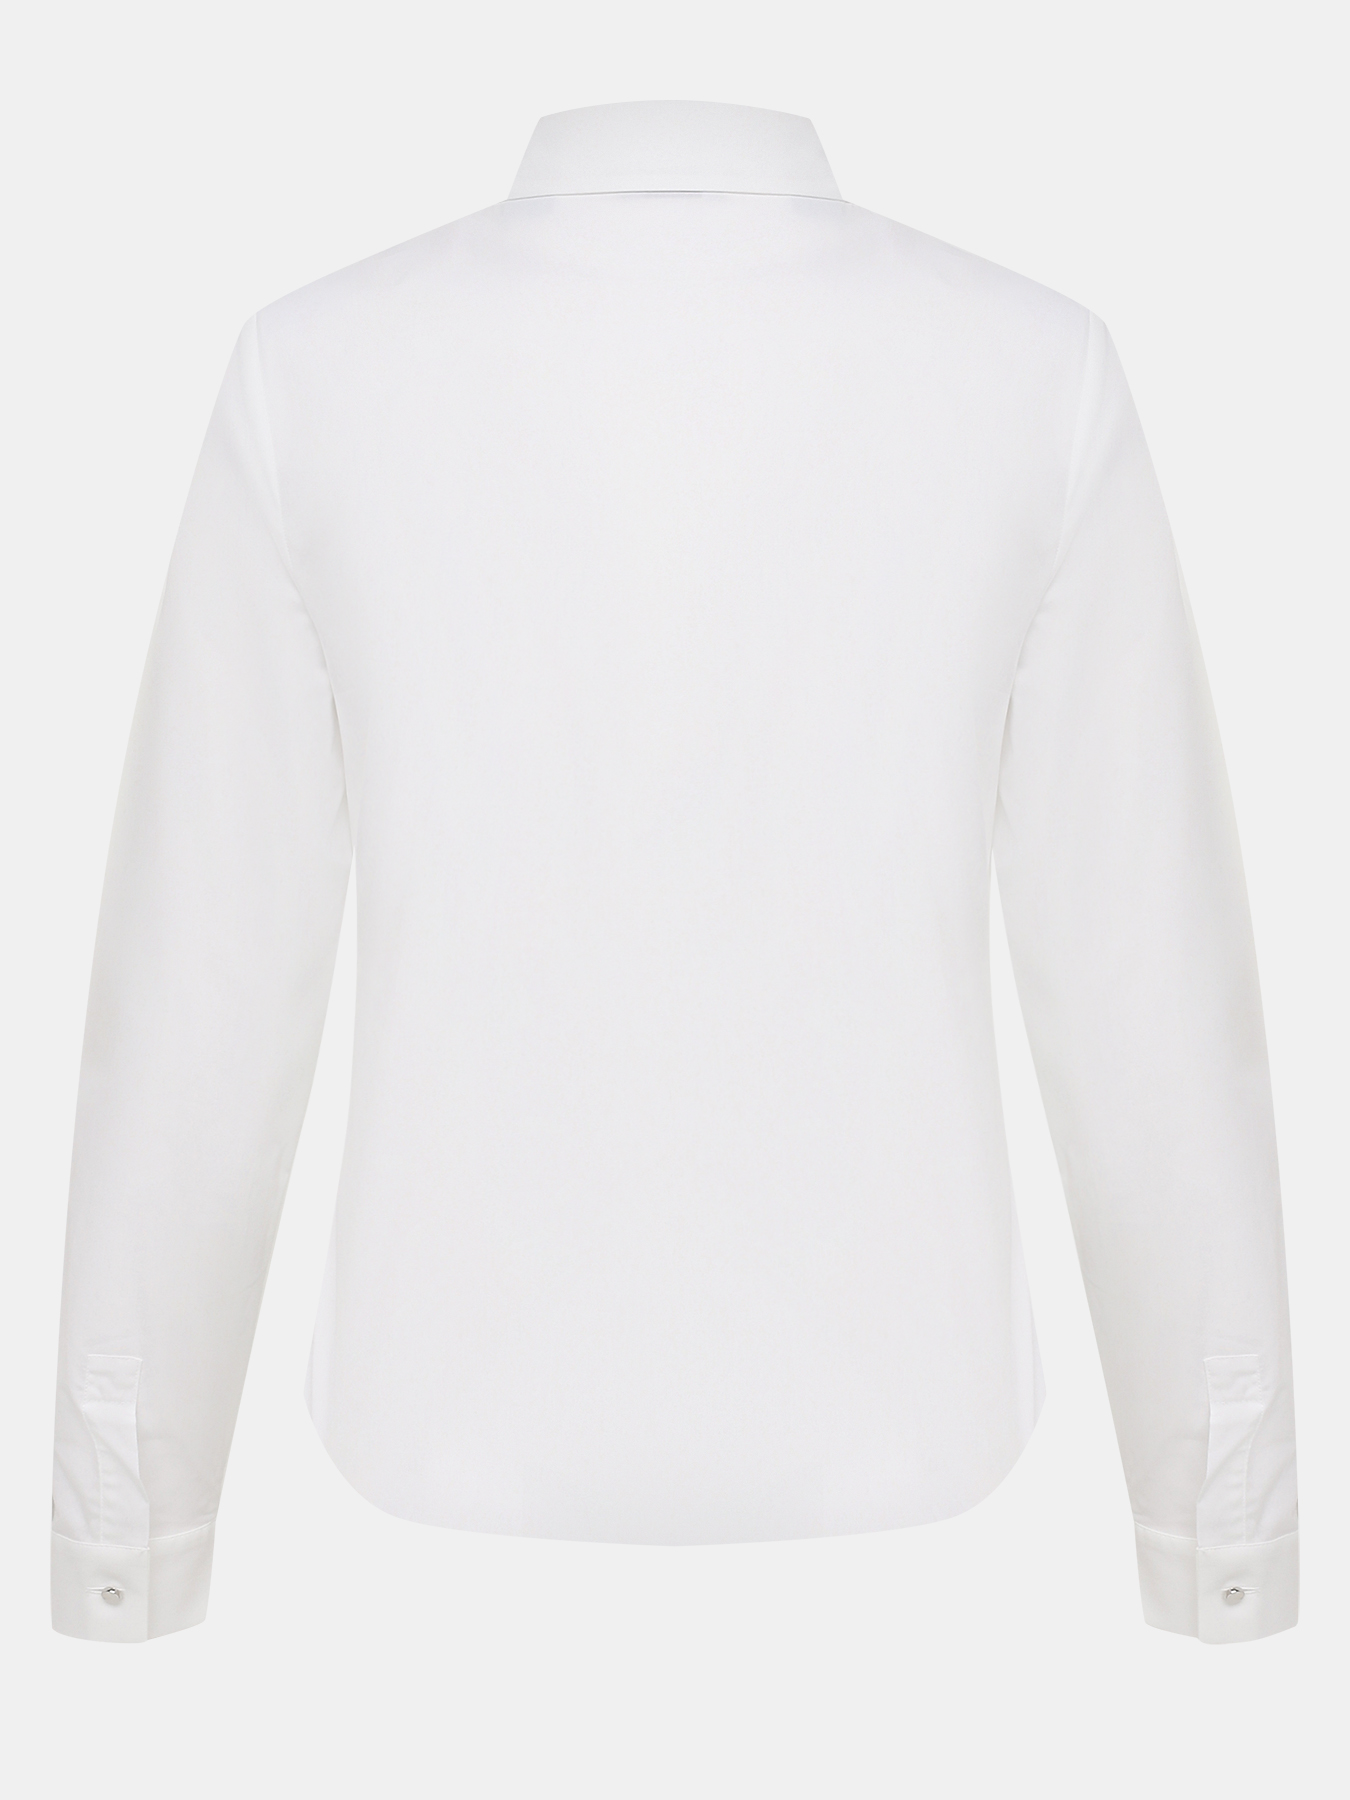 Блузка Zanetti 426611-021, цвет белый, размер 42 - фото 2